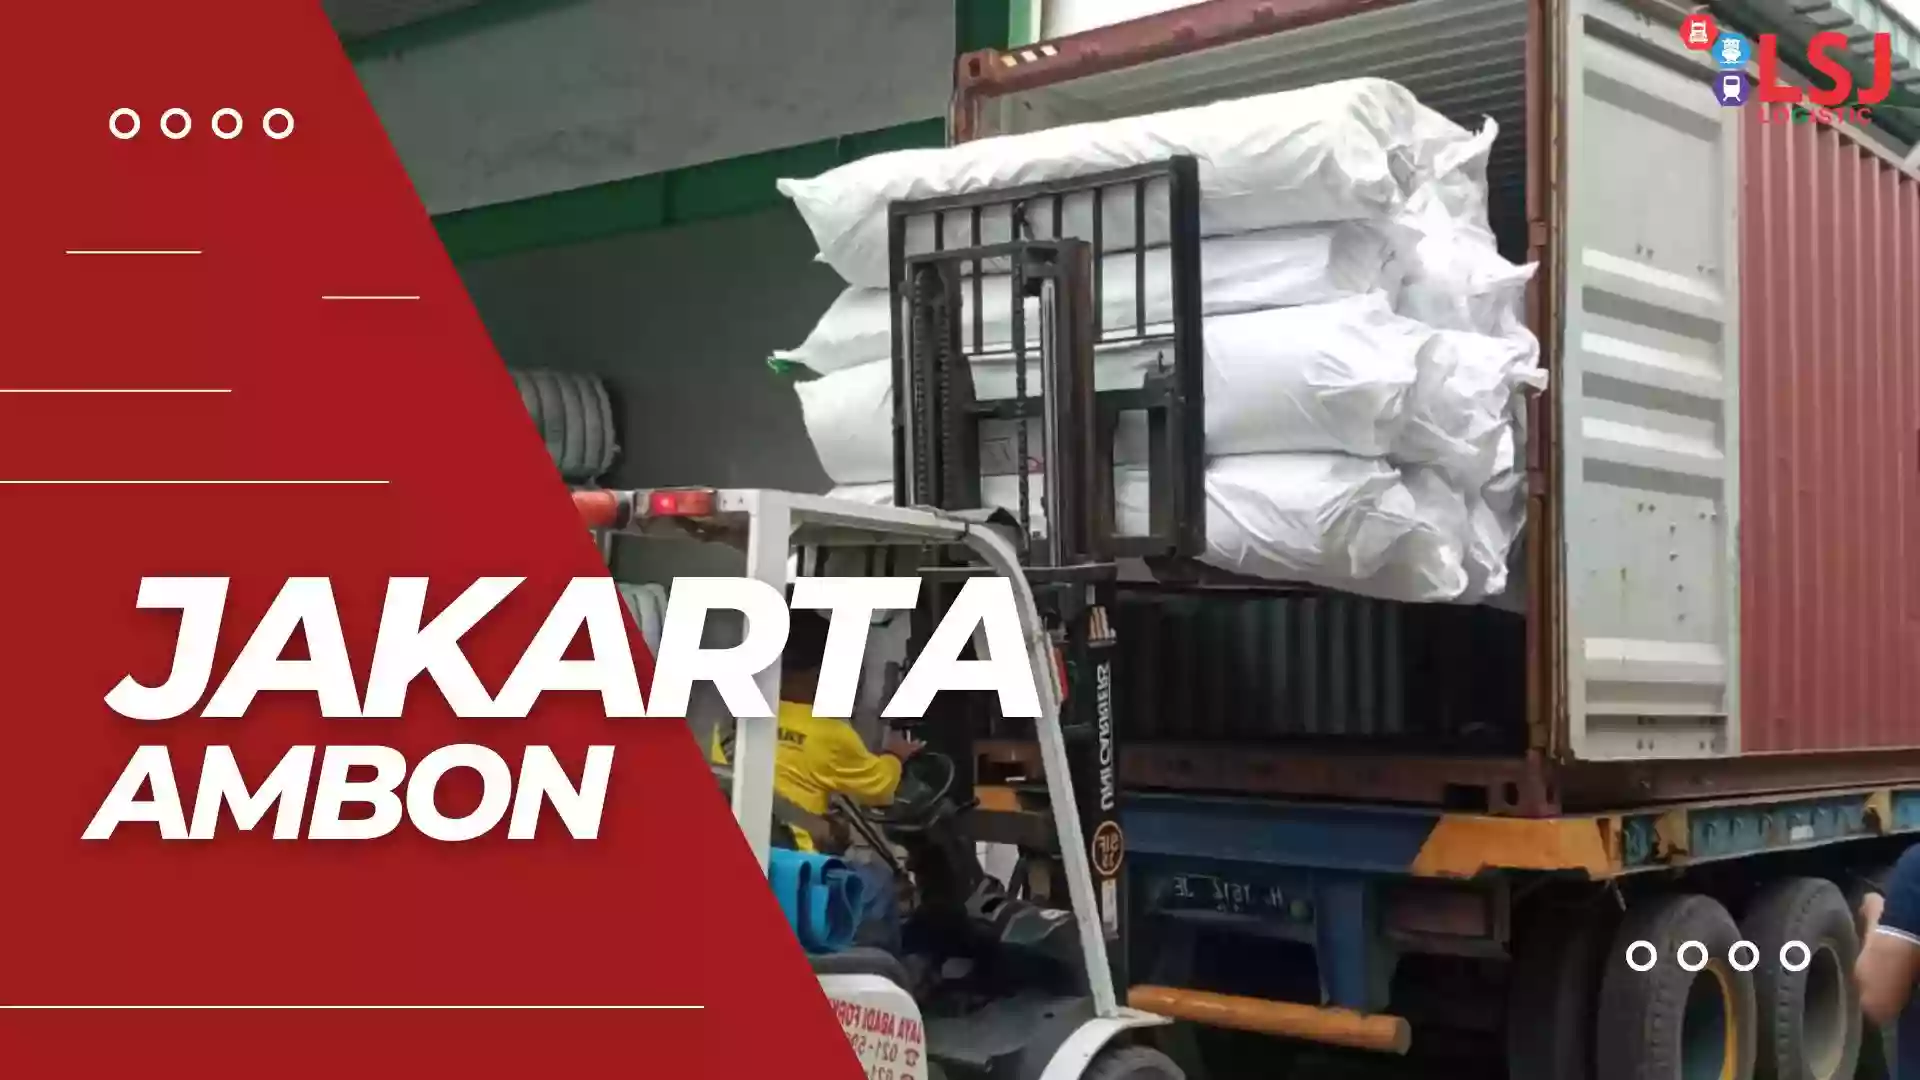 Harga Pengiriman Container Jakarta Ambon